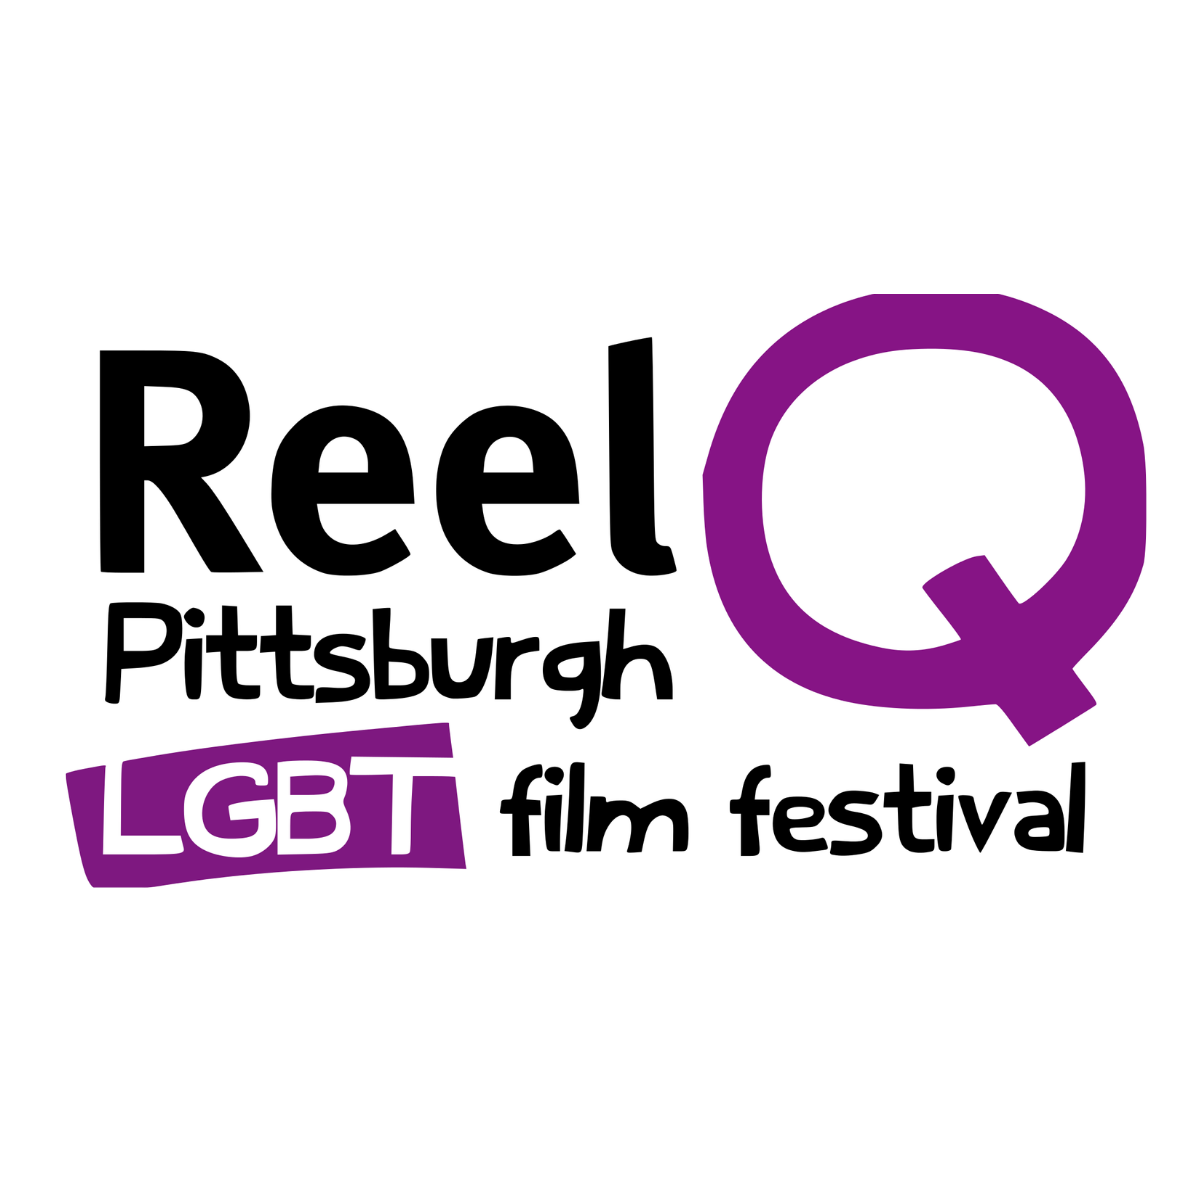 Reel Q Pittsburgh LGBT film festival